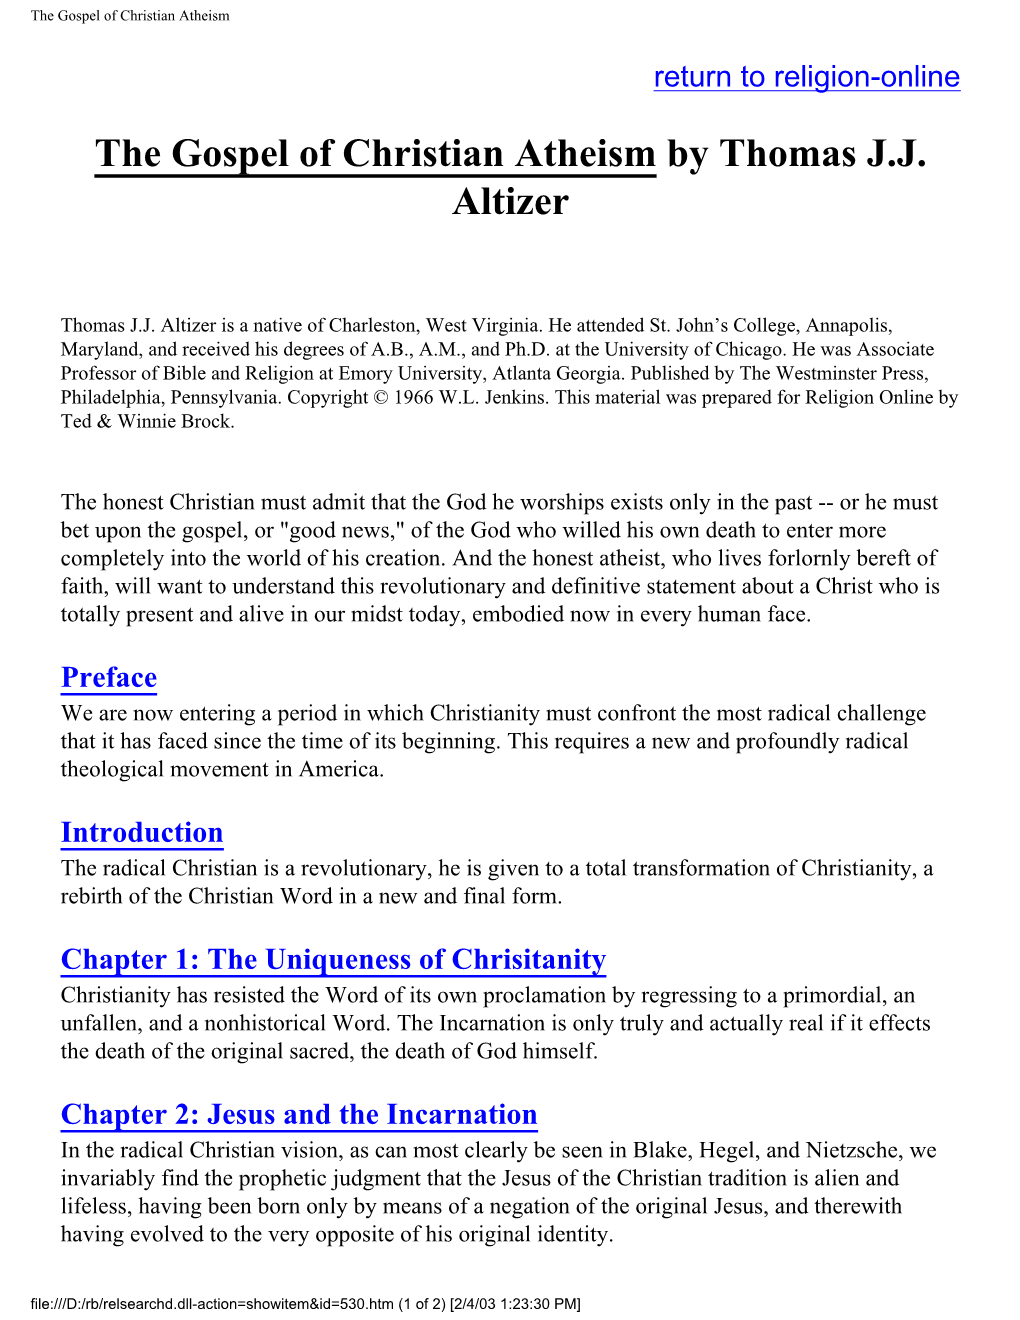 The Gospel of Christian Atheism by Thomas JJ Altizer